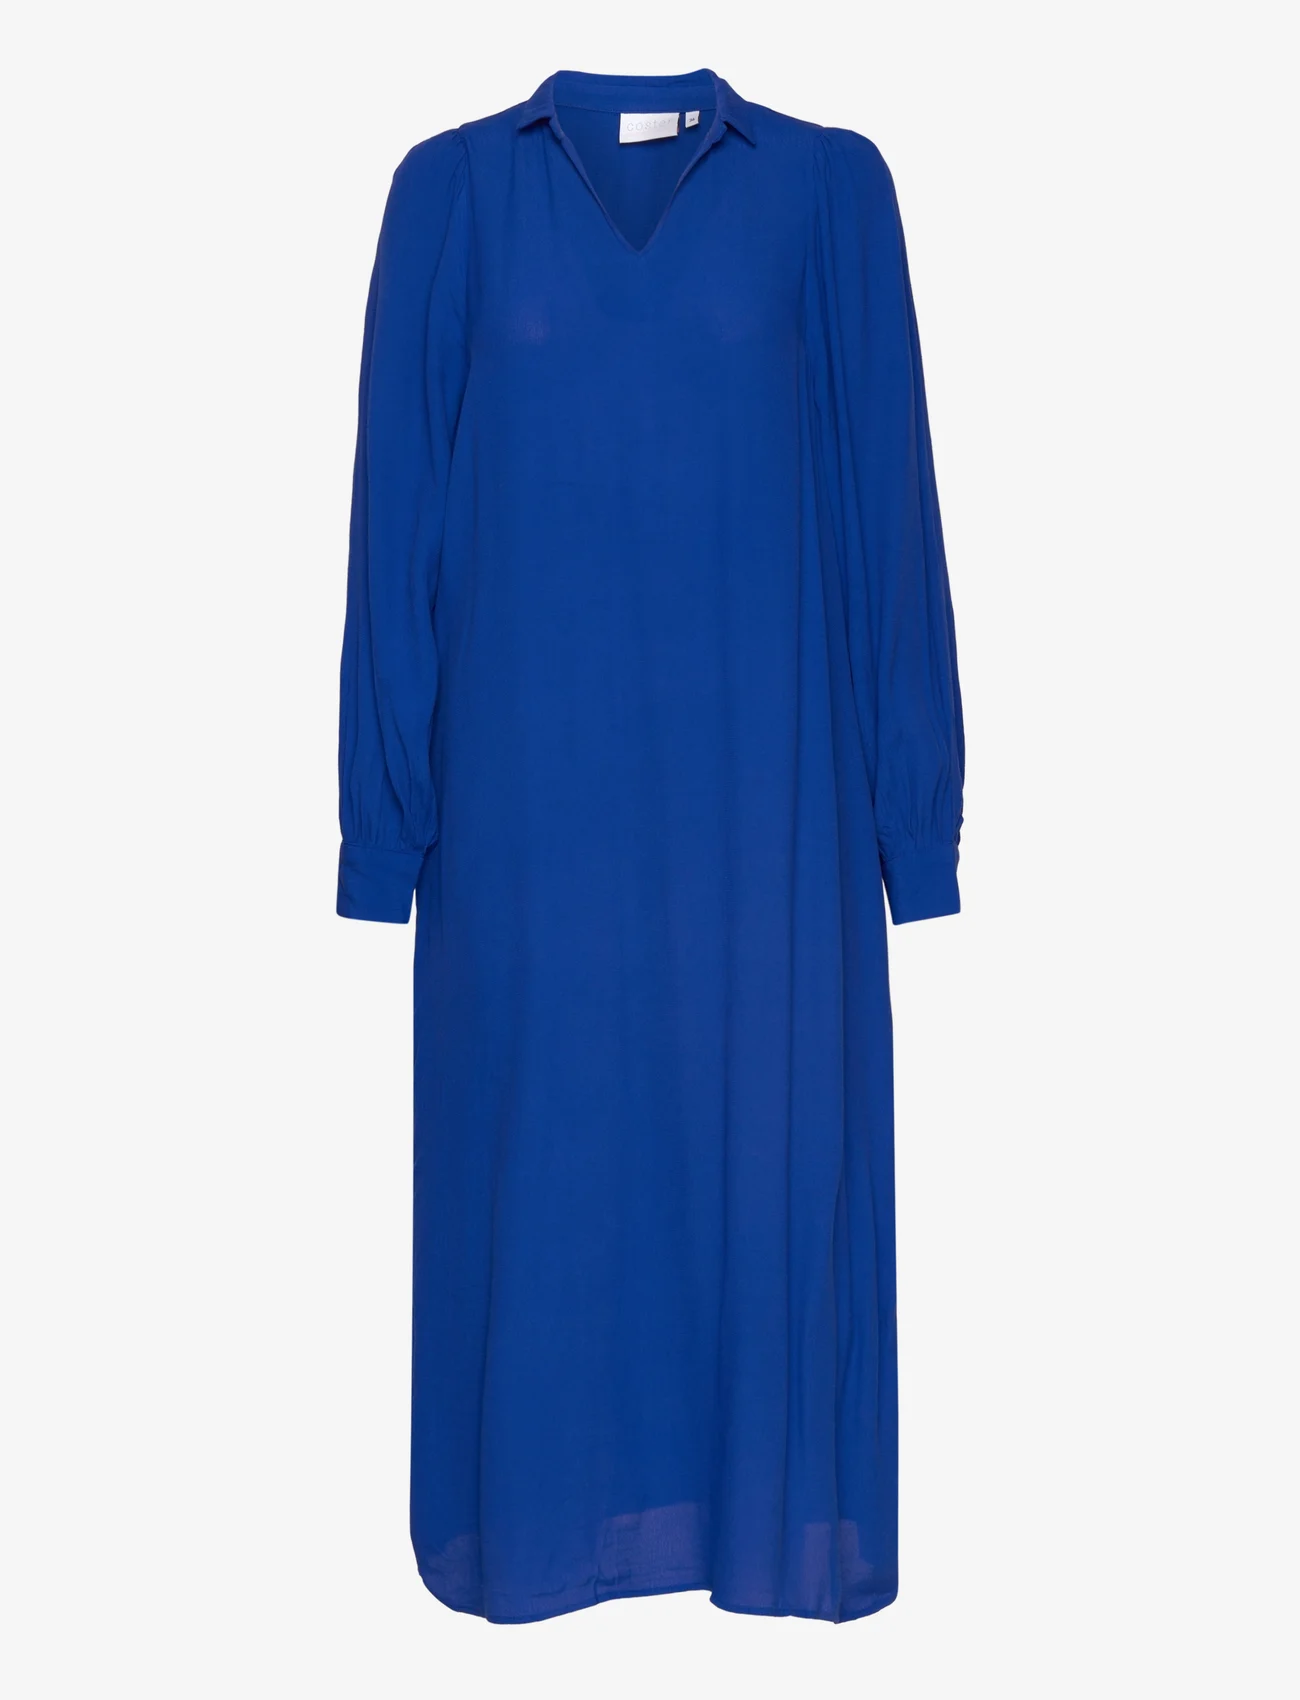 Coster Copenhagen - Dress with wide sleeves - midikjoler - electric blue - 0